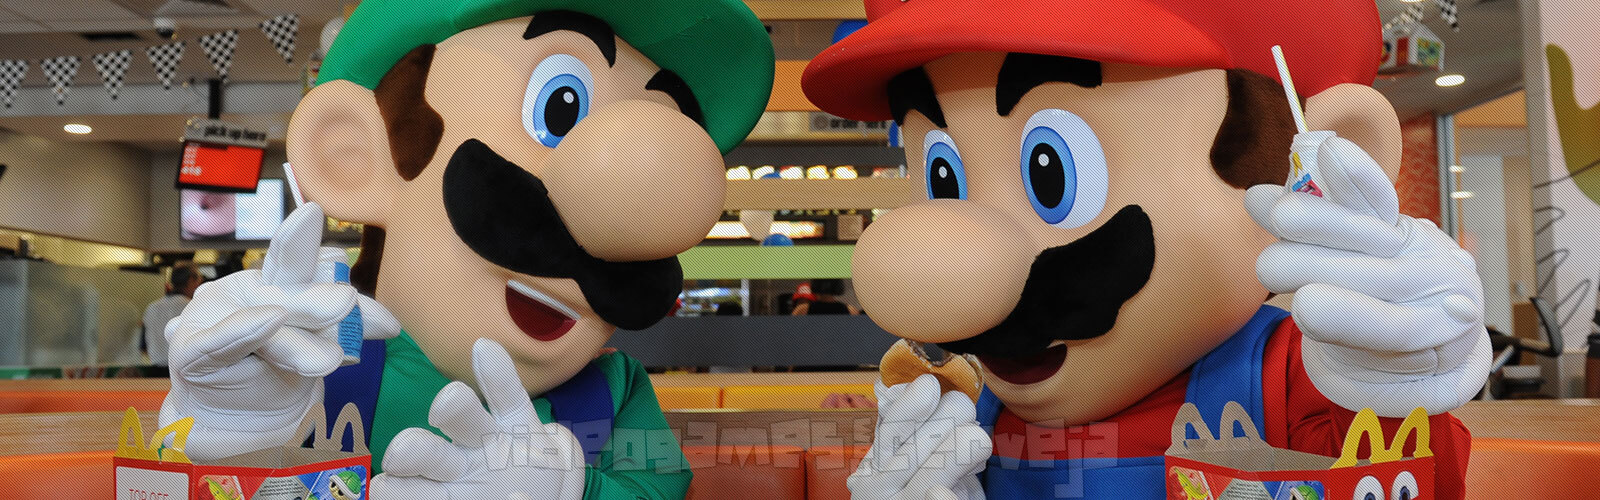 Super Mario voltará a ser tema dos brindes do McLanche Feliz em Novembro Cover